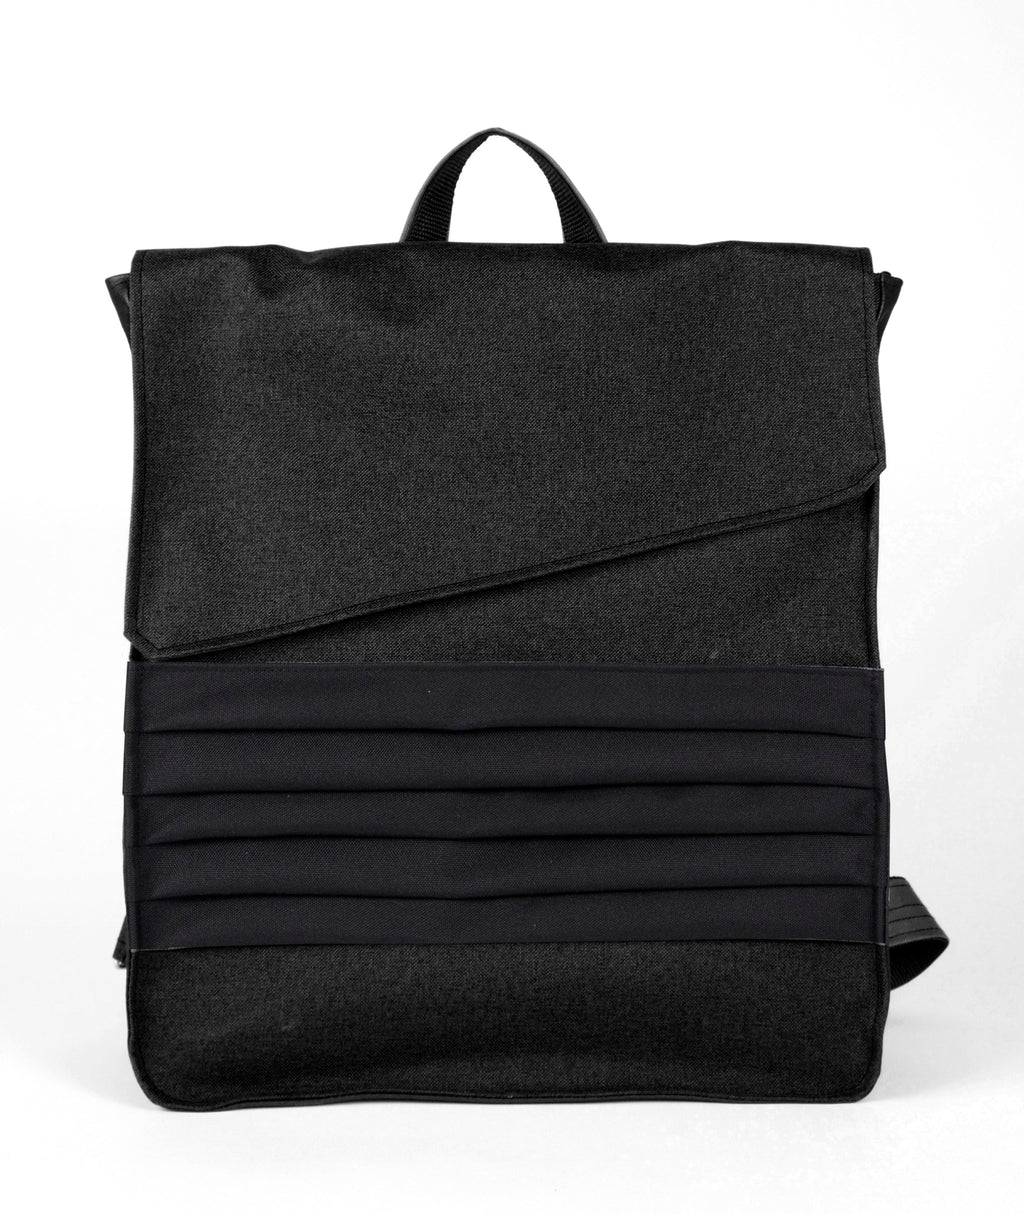 Bardo work backpack - black - Premium Bardo work backpack from BARDO ART WORKS - Just lvblue, dark blue, handemade, laptop backpack, unisex, vegan leather, water proof, work160! Shop now at BARDO ART WORKS